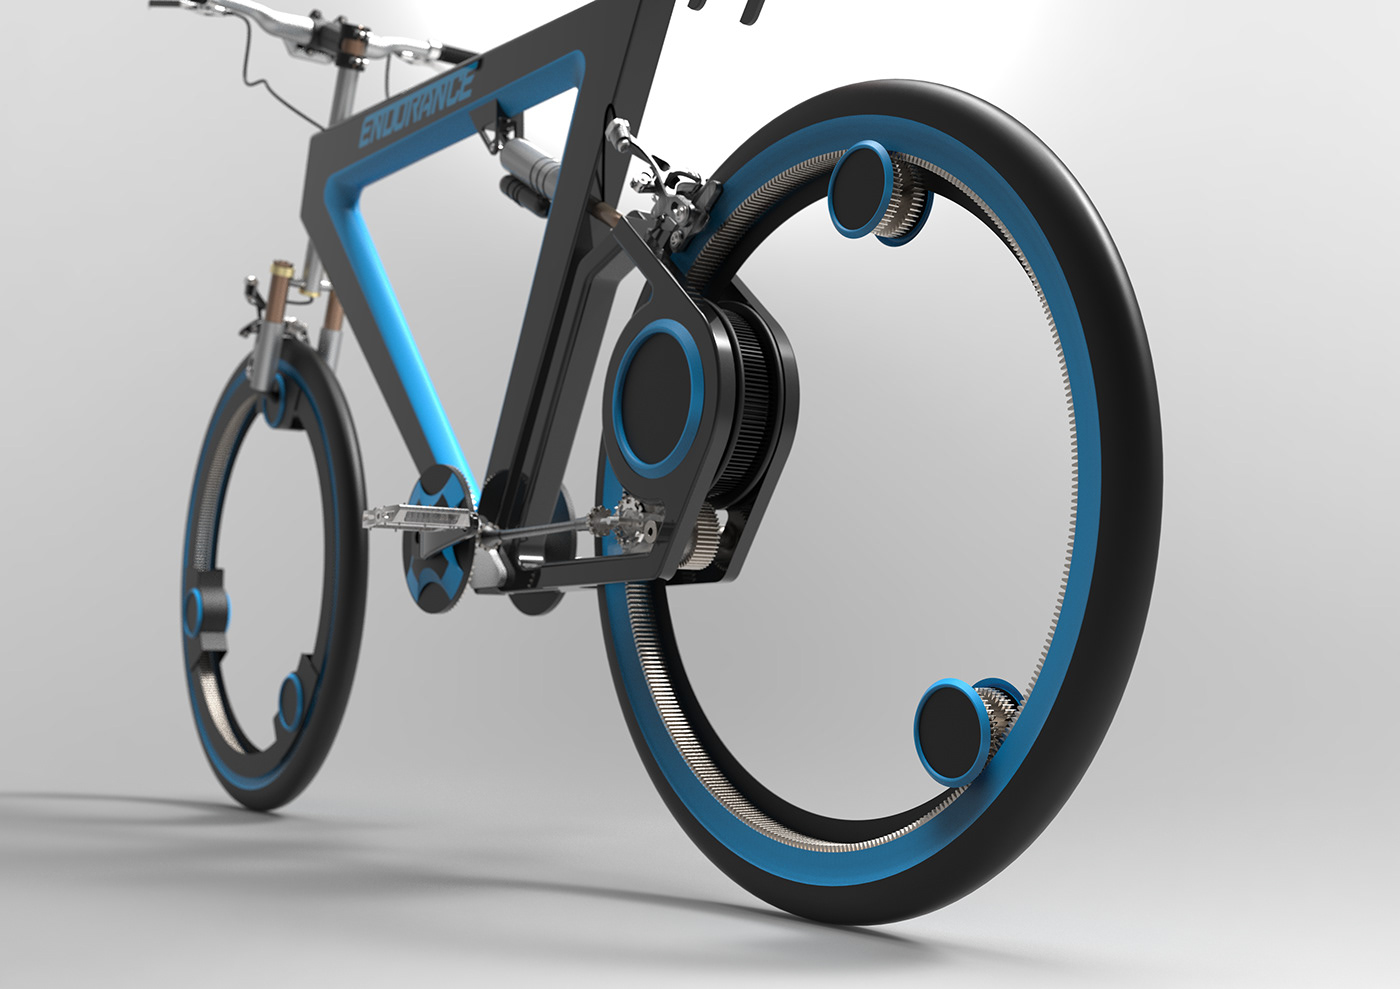 Ebike Bike cycle Urban urbanmobility transportationdesign productdesign bikedesign mobilitysolution shaftdrive